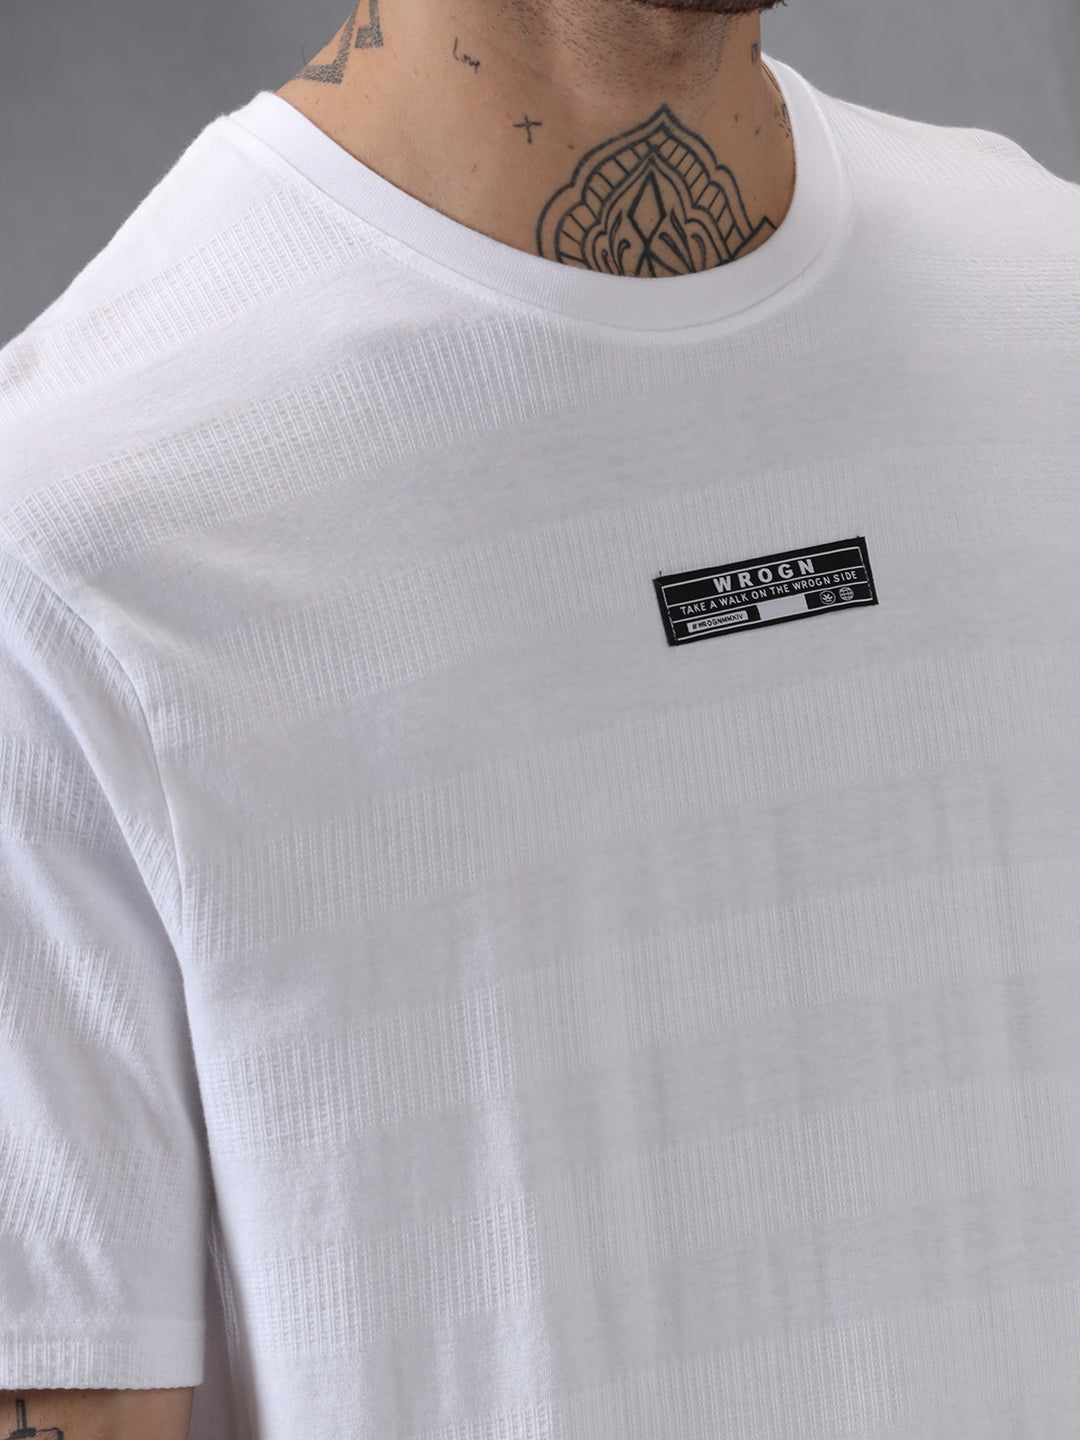 Textured White Crew Neck T-Shirt